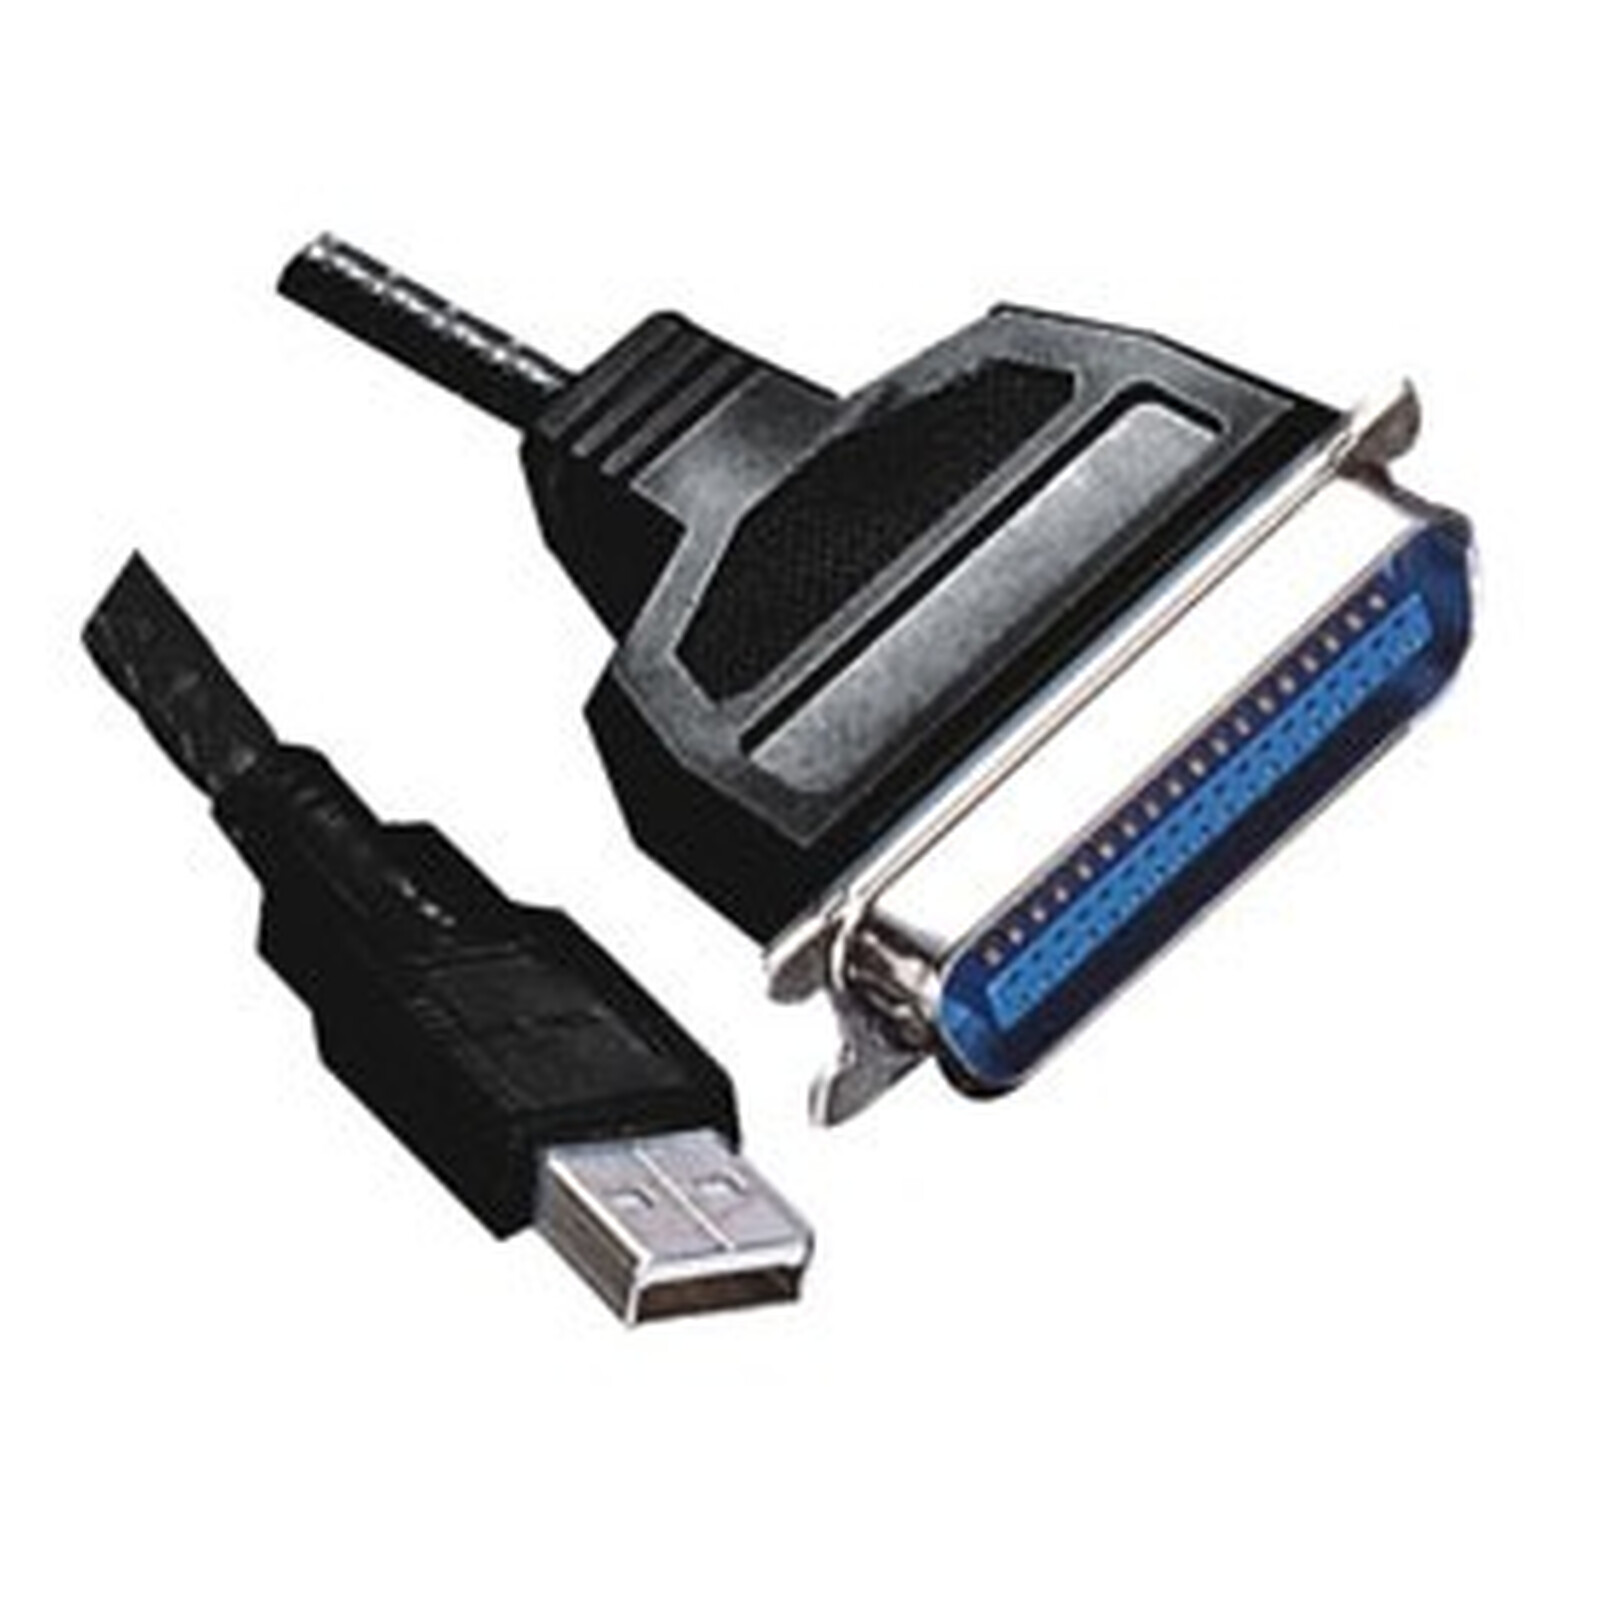 Cavo USB per stampante Parallle (Centronics C36) - USB - Garanzia 3 anni  LDLC